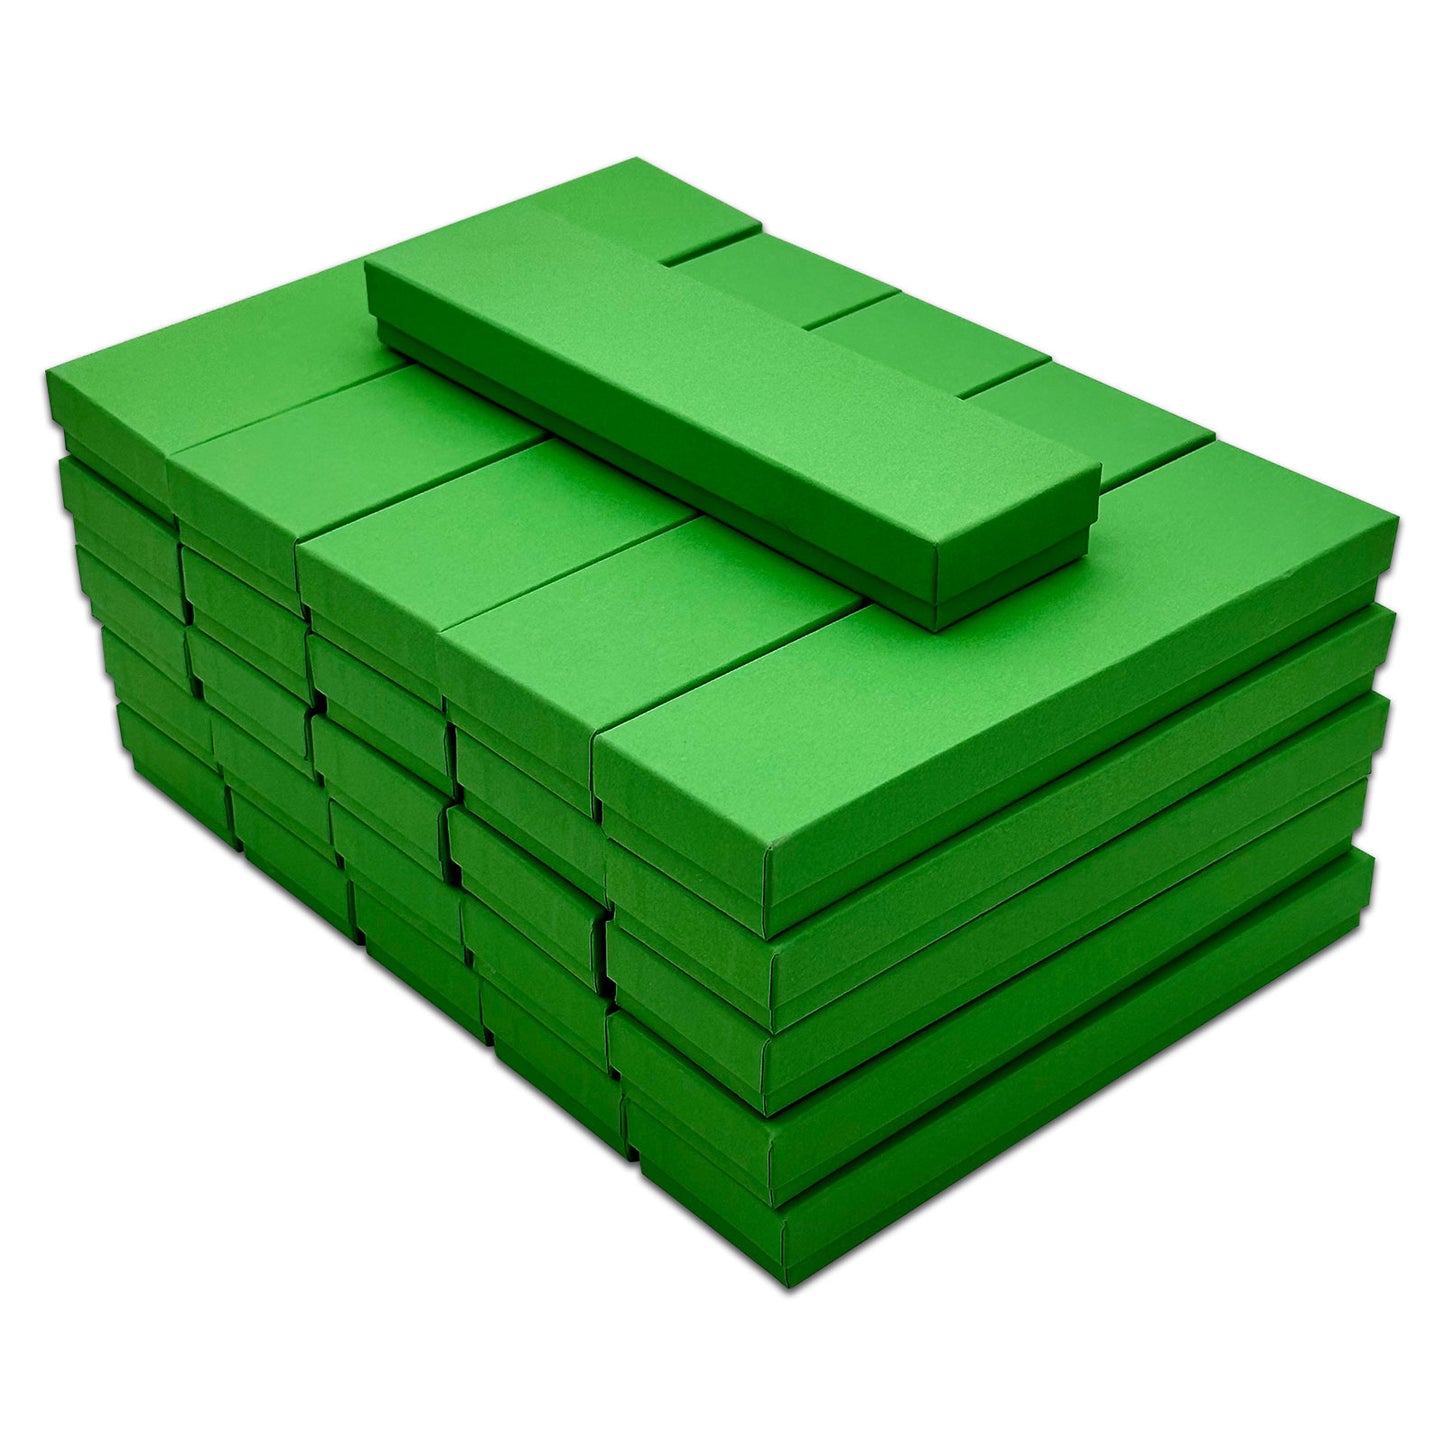 8" x 2" x 1" Light Green Cotton Filled Box